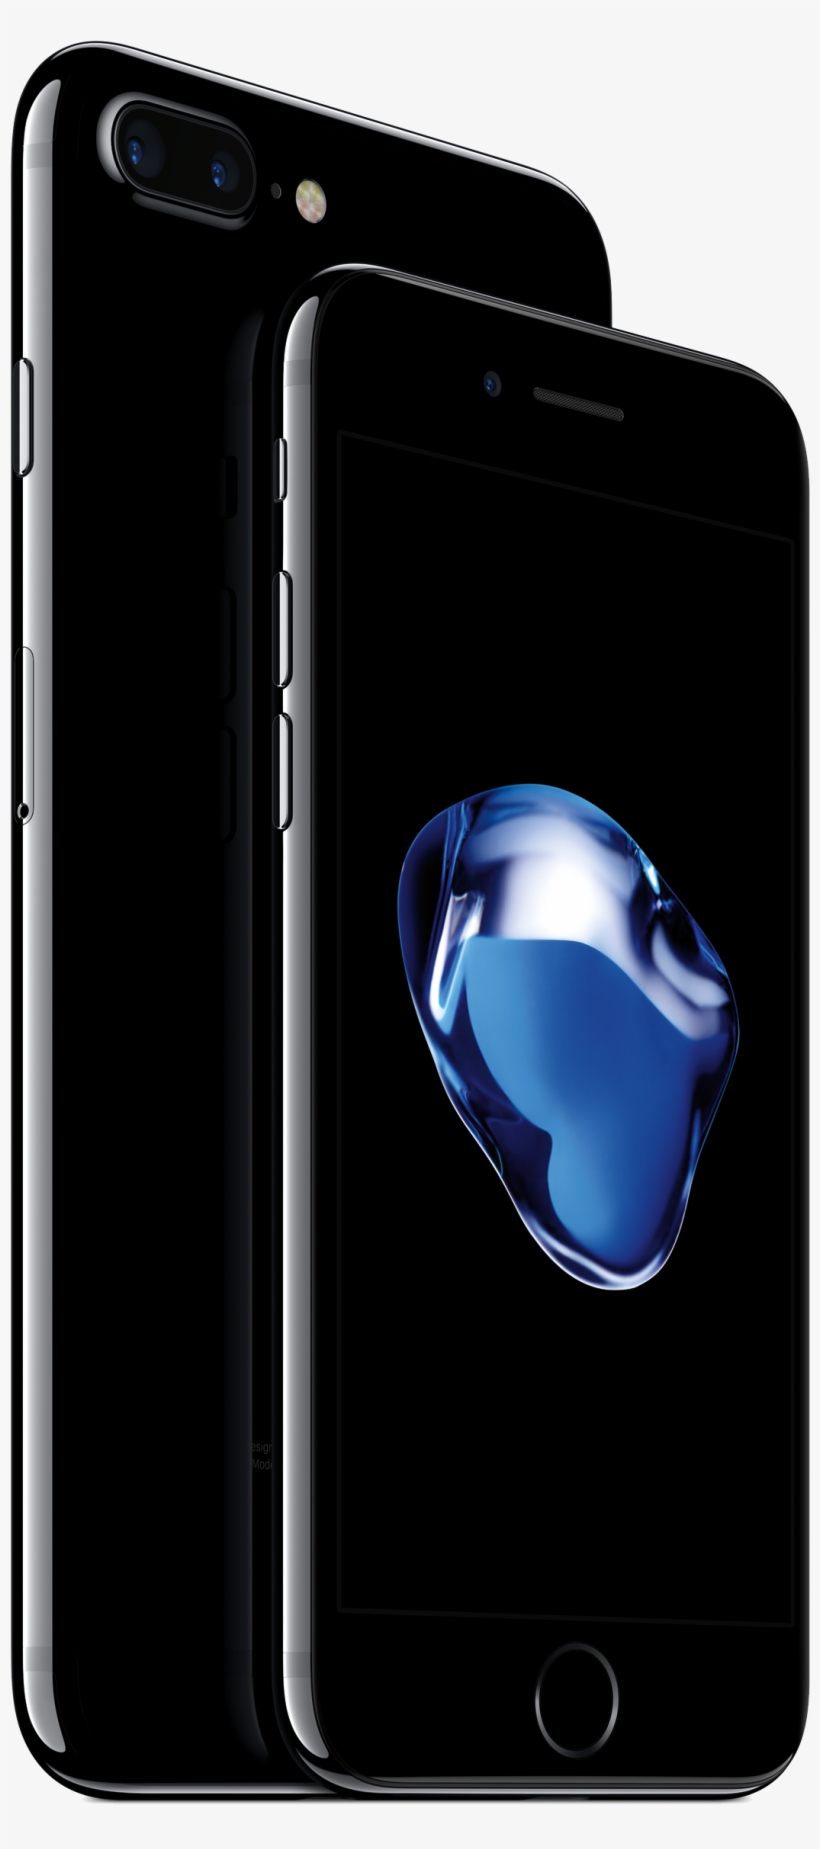 Tcc Talk The New Apple Iphone 7 And Iphone 7 Plus - Harga Iphone 7 Plus Malaysia 2018, transparent png #4133683